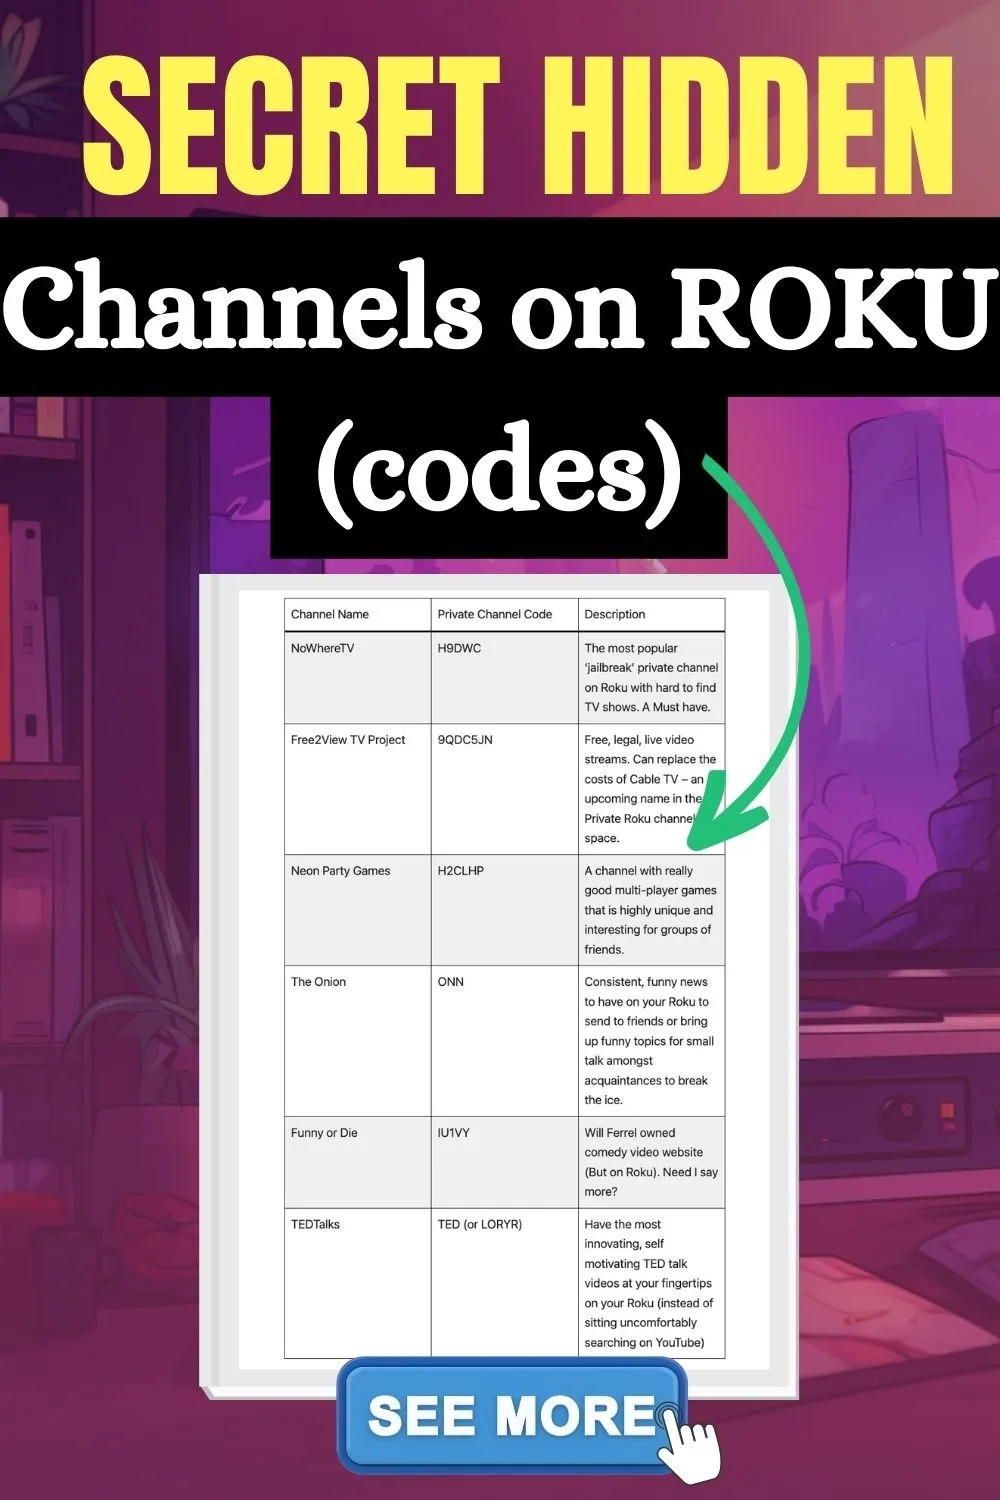 Secret hidden channels on Roku codes